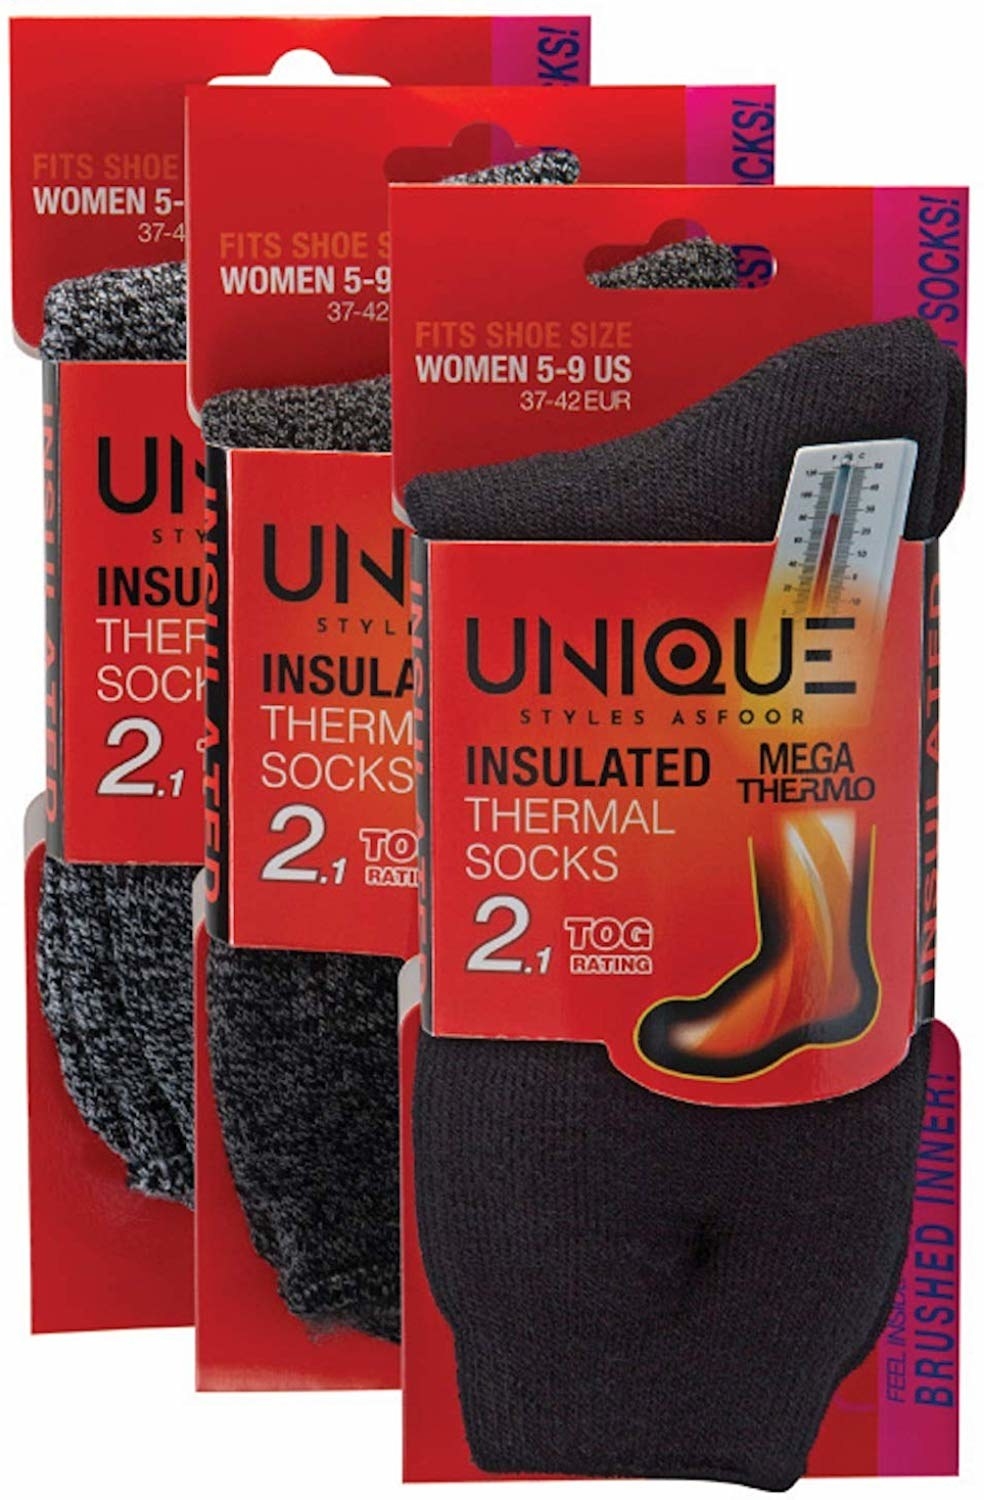 Three pairs of socks in black and marled grey-black